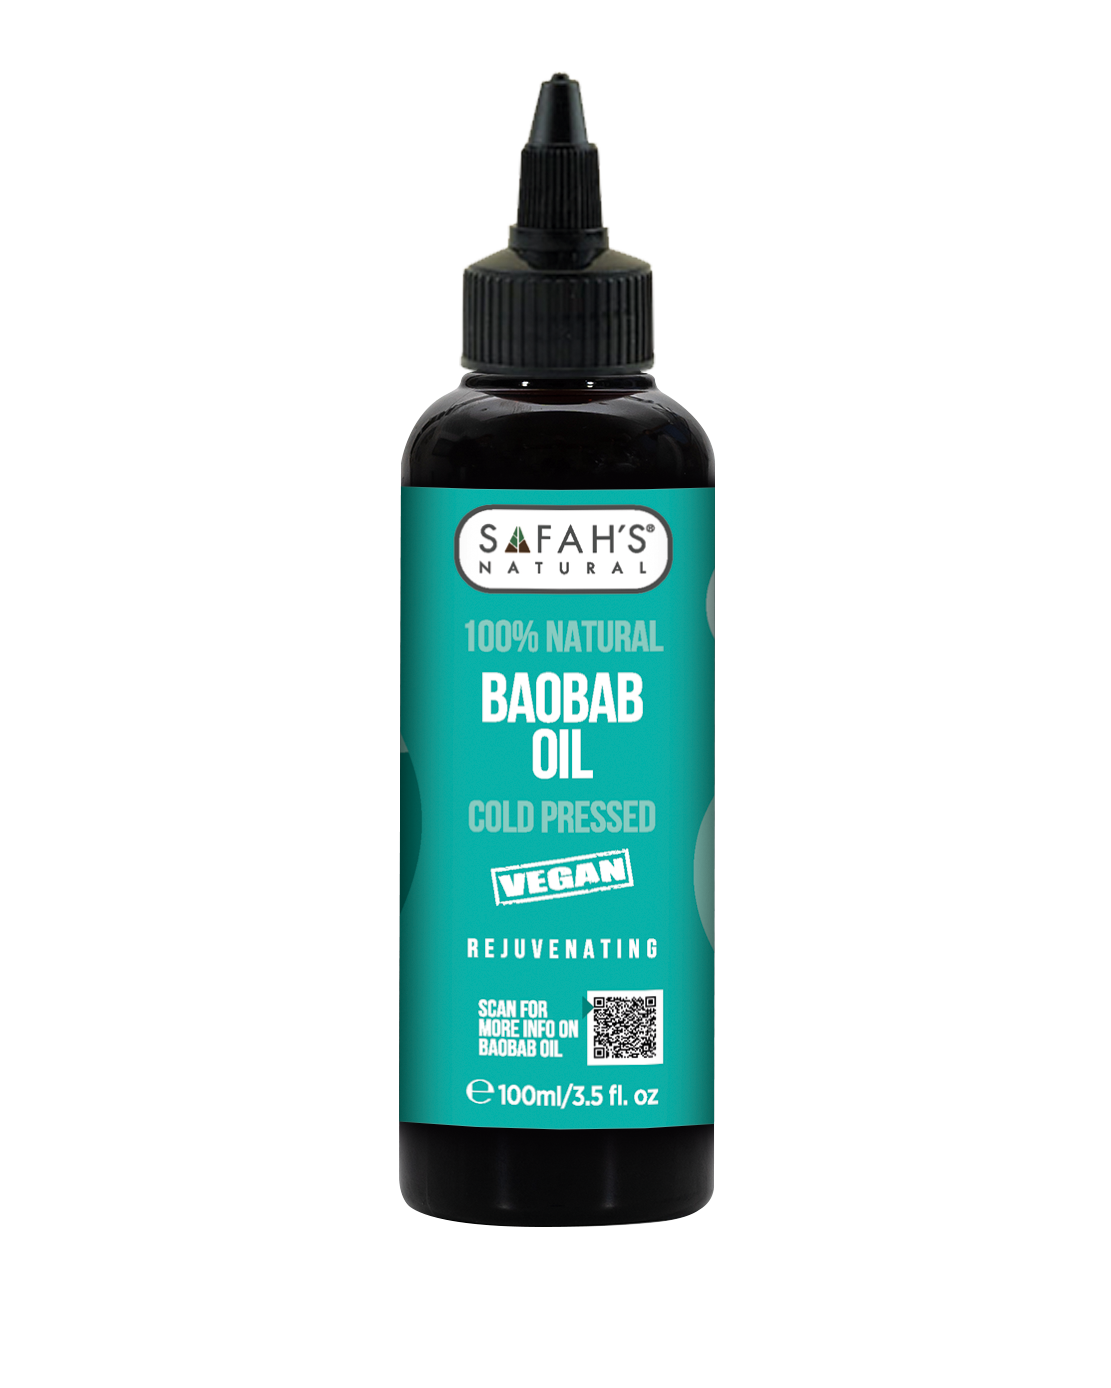 Baobab oil 100% natural - Complete Beauty Elixir for Radiant Wellness